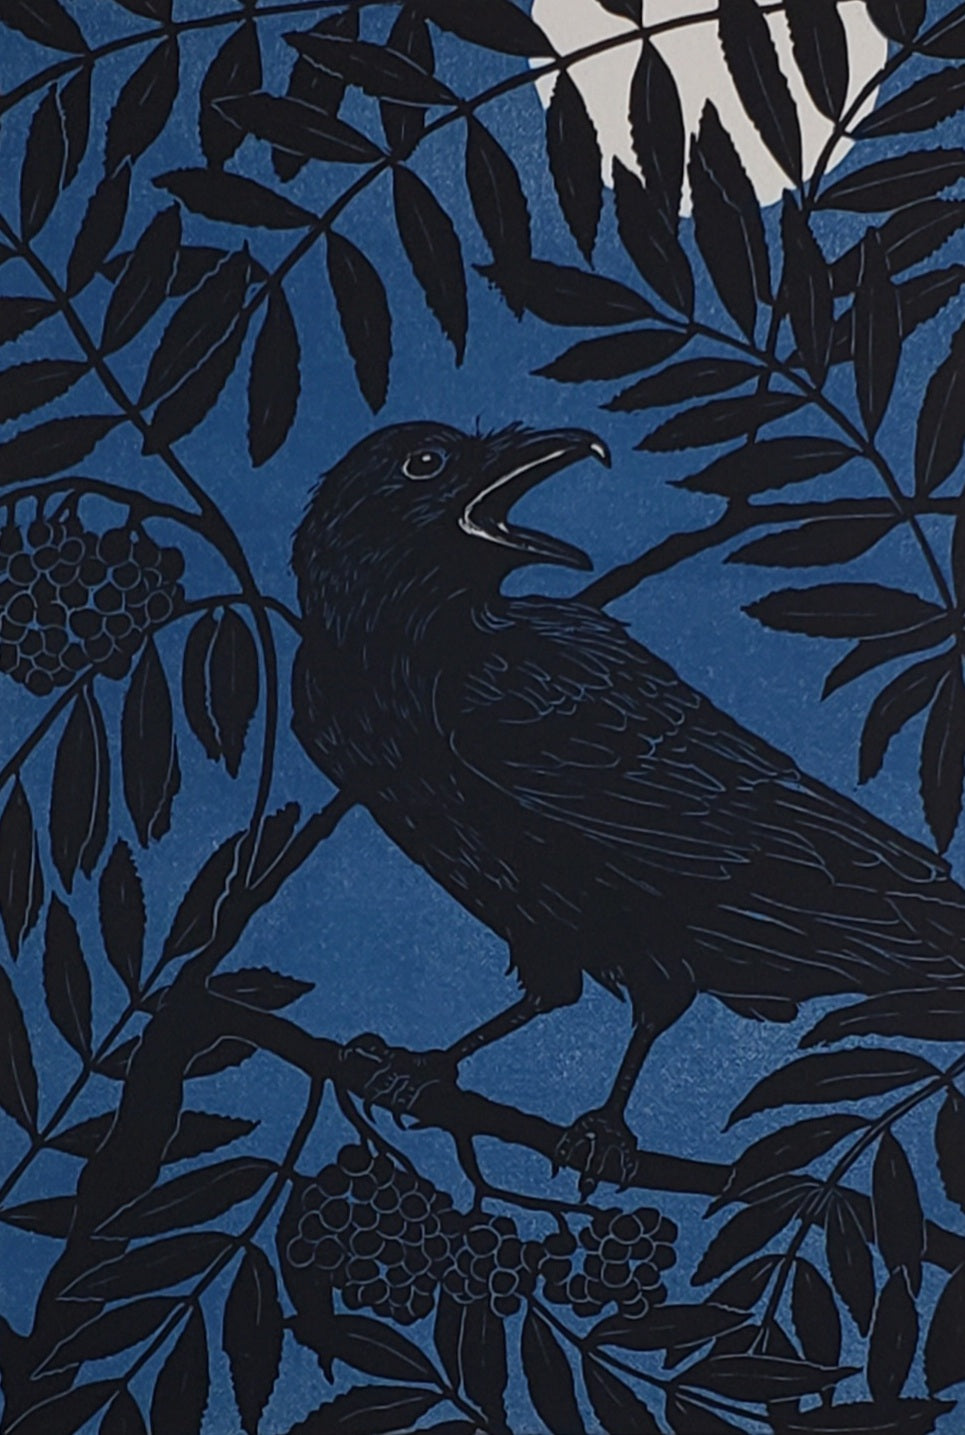 Blackbird singing in the dead of night